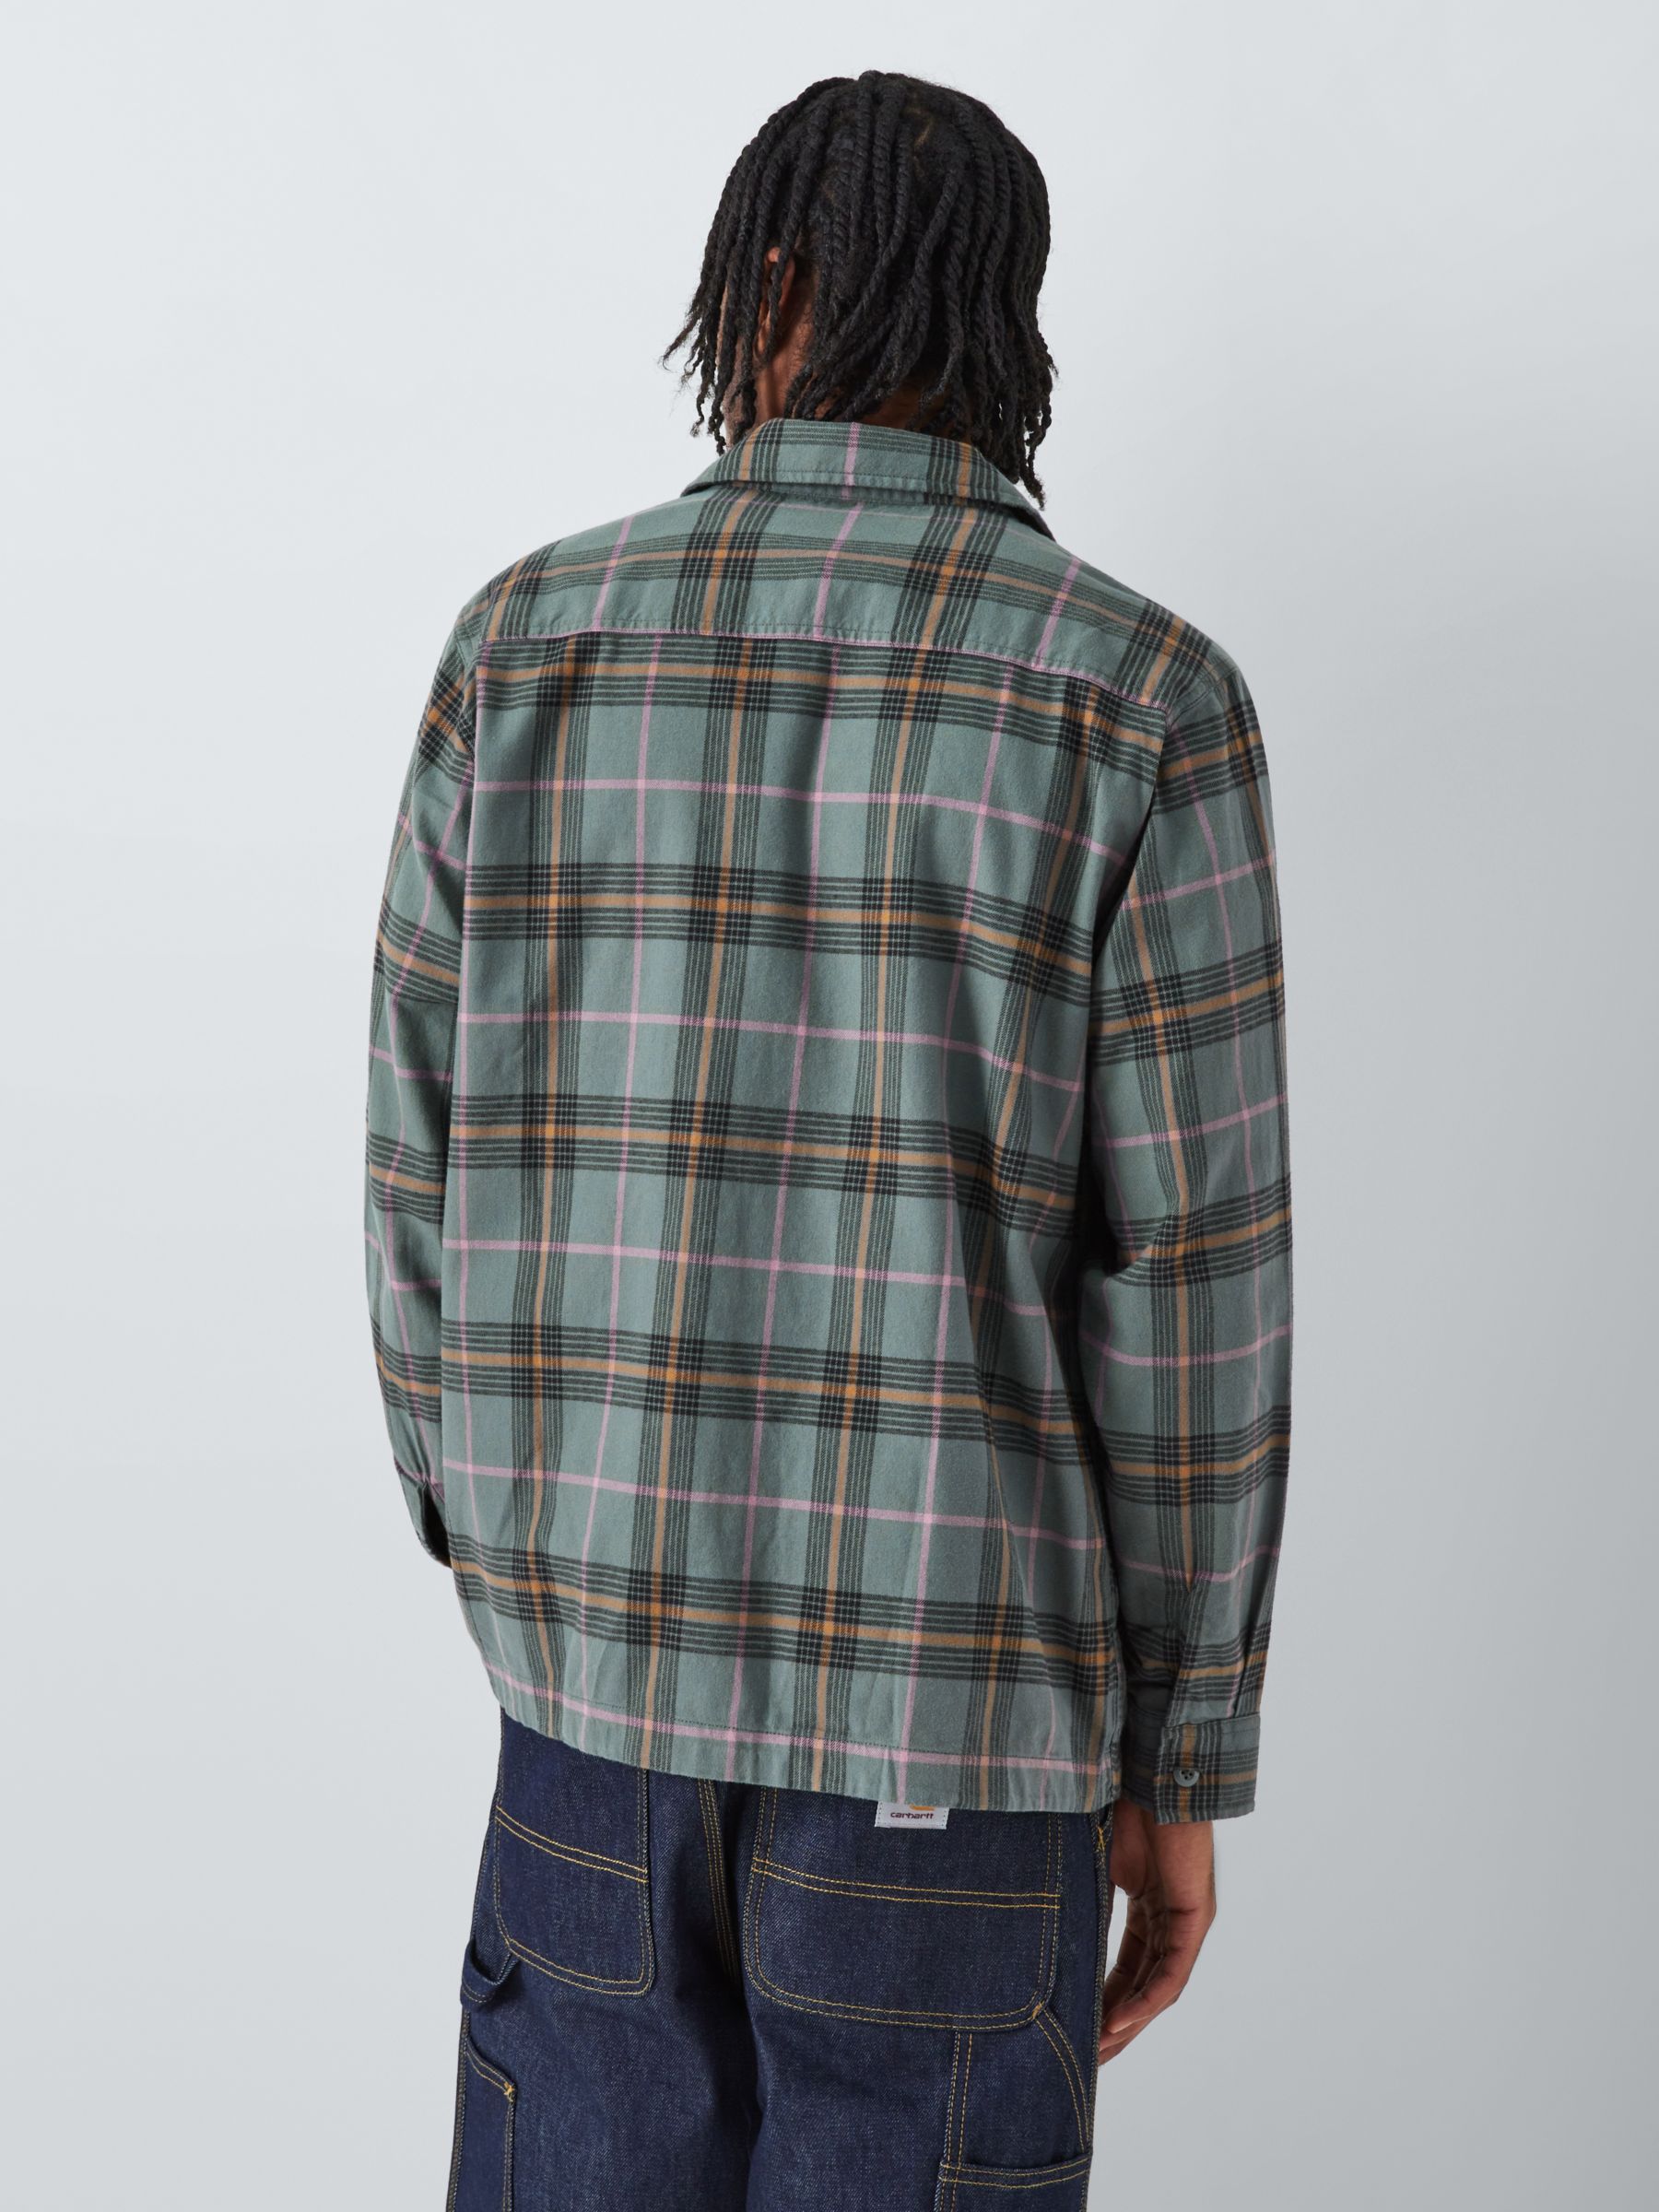 Carhartt WIP Cotton Flannel Checked Shirt, Multi, XL